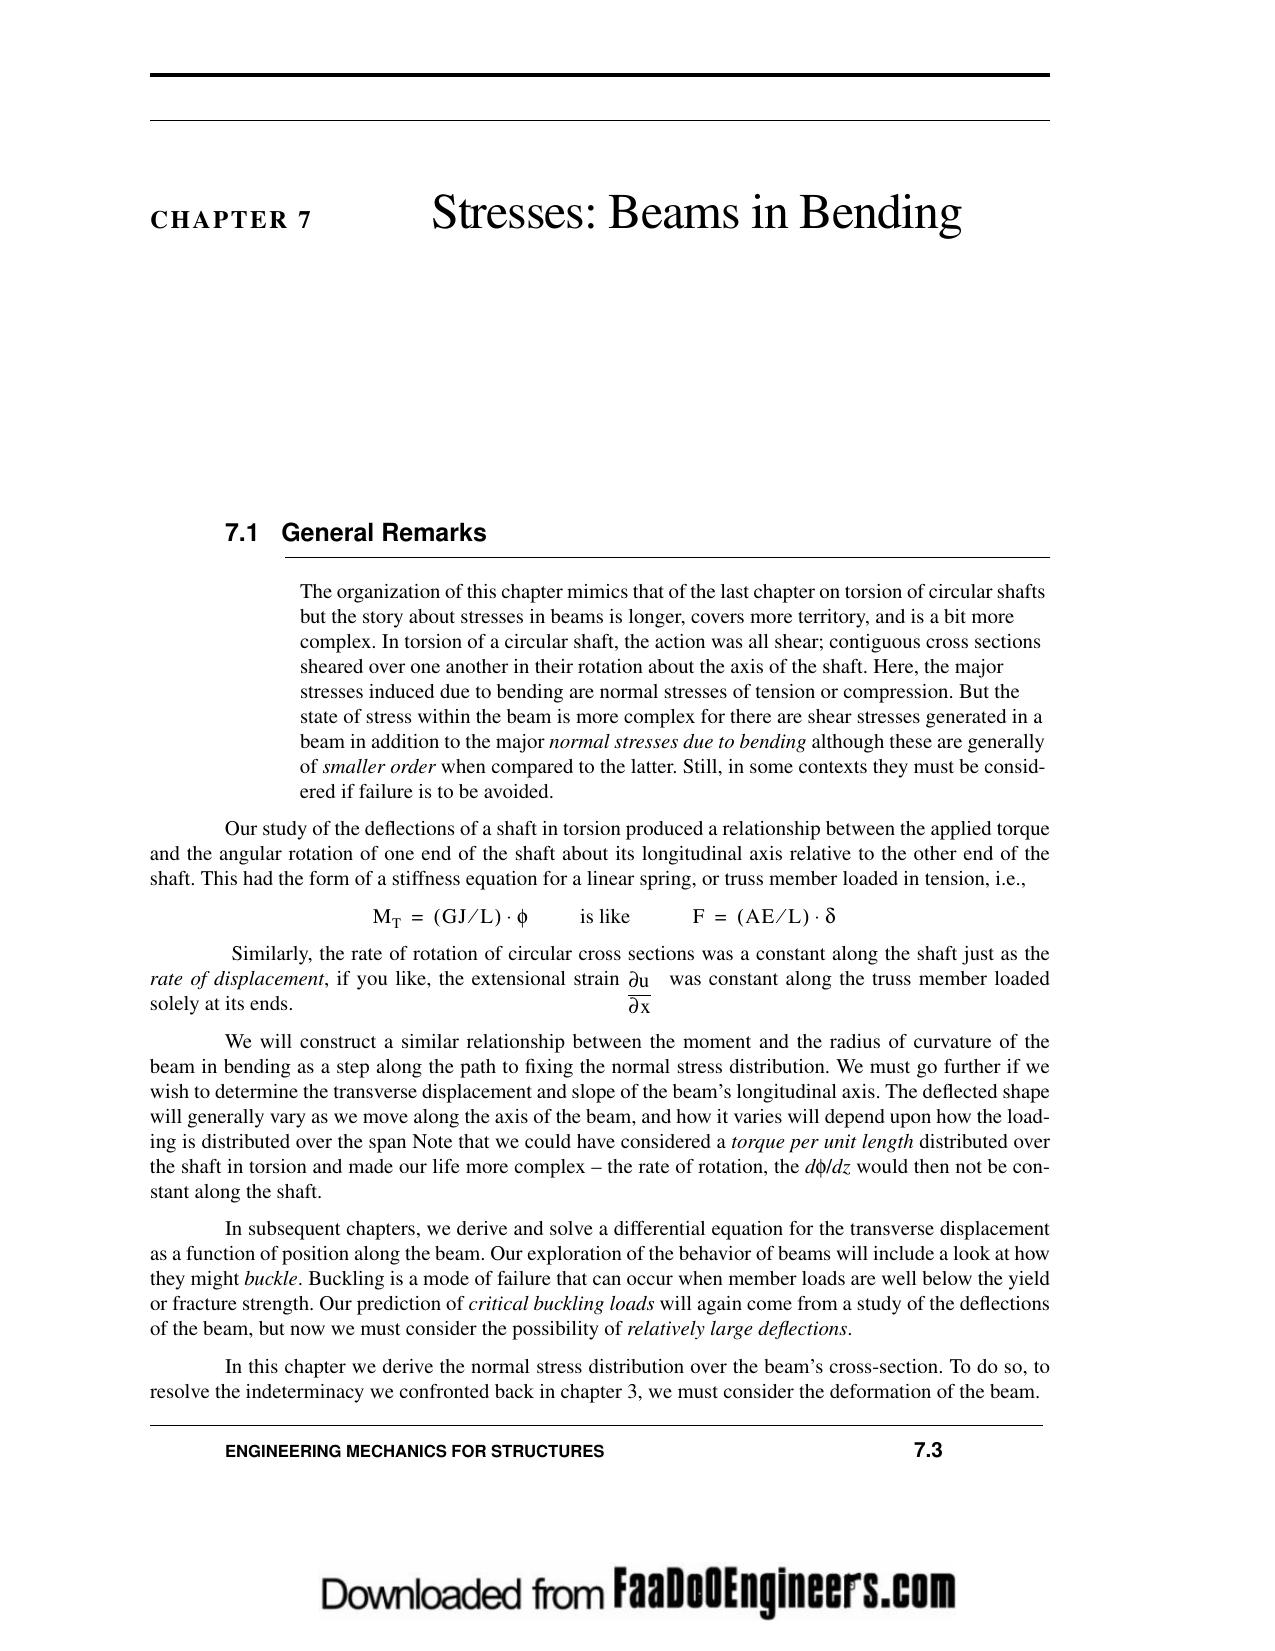 Mechanics of solids 7 Stresses Beams in Bending